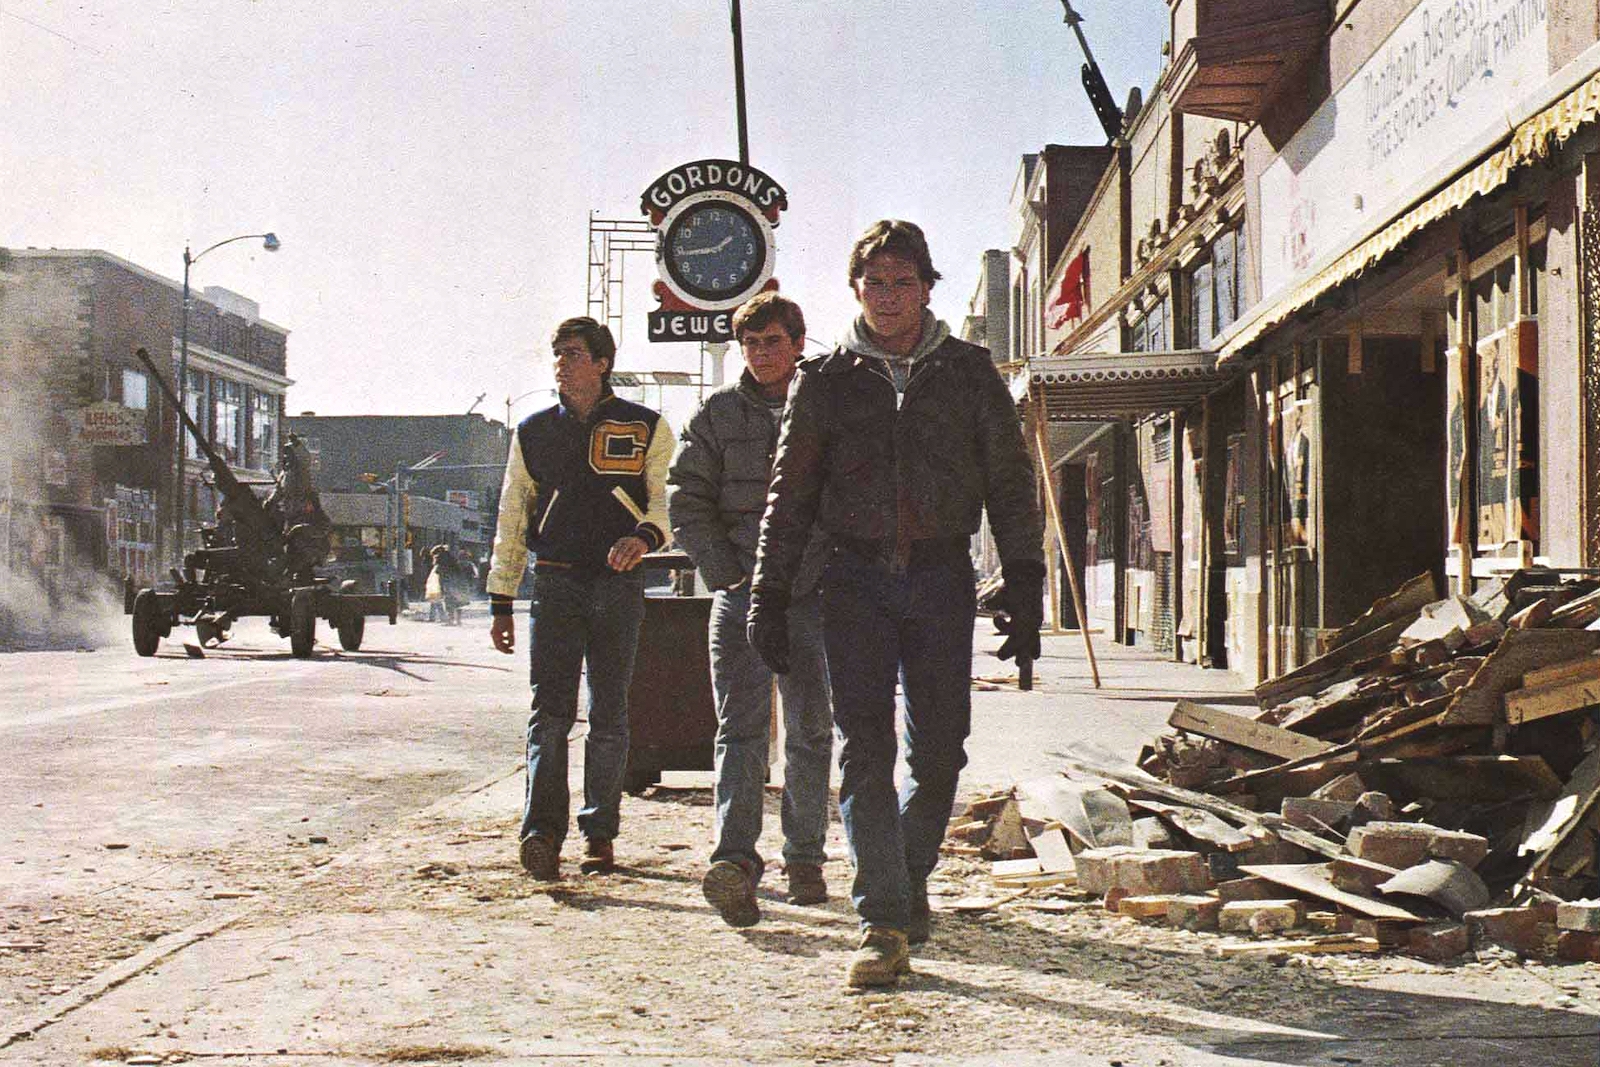 When war imitates art: rediscovering Red Dawn, the 1984 movie inspiring  Ukrainian fighters